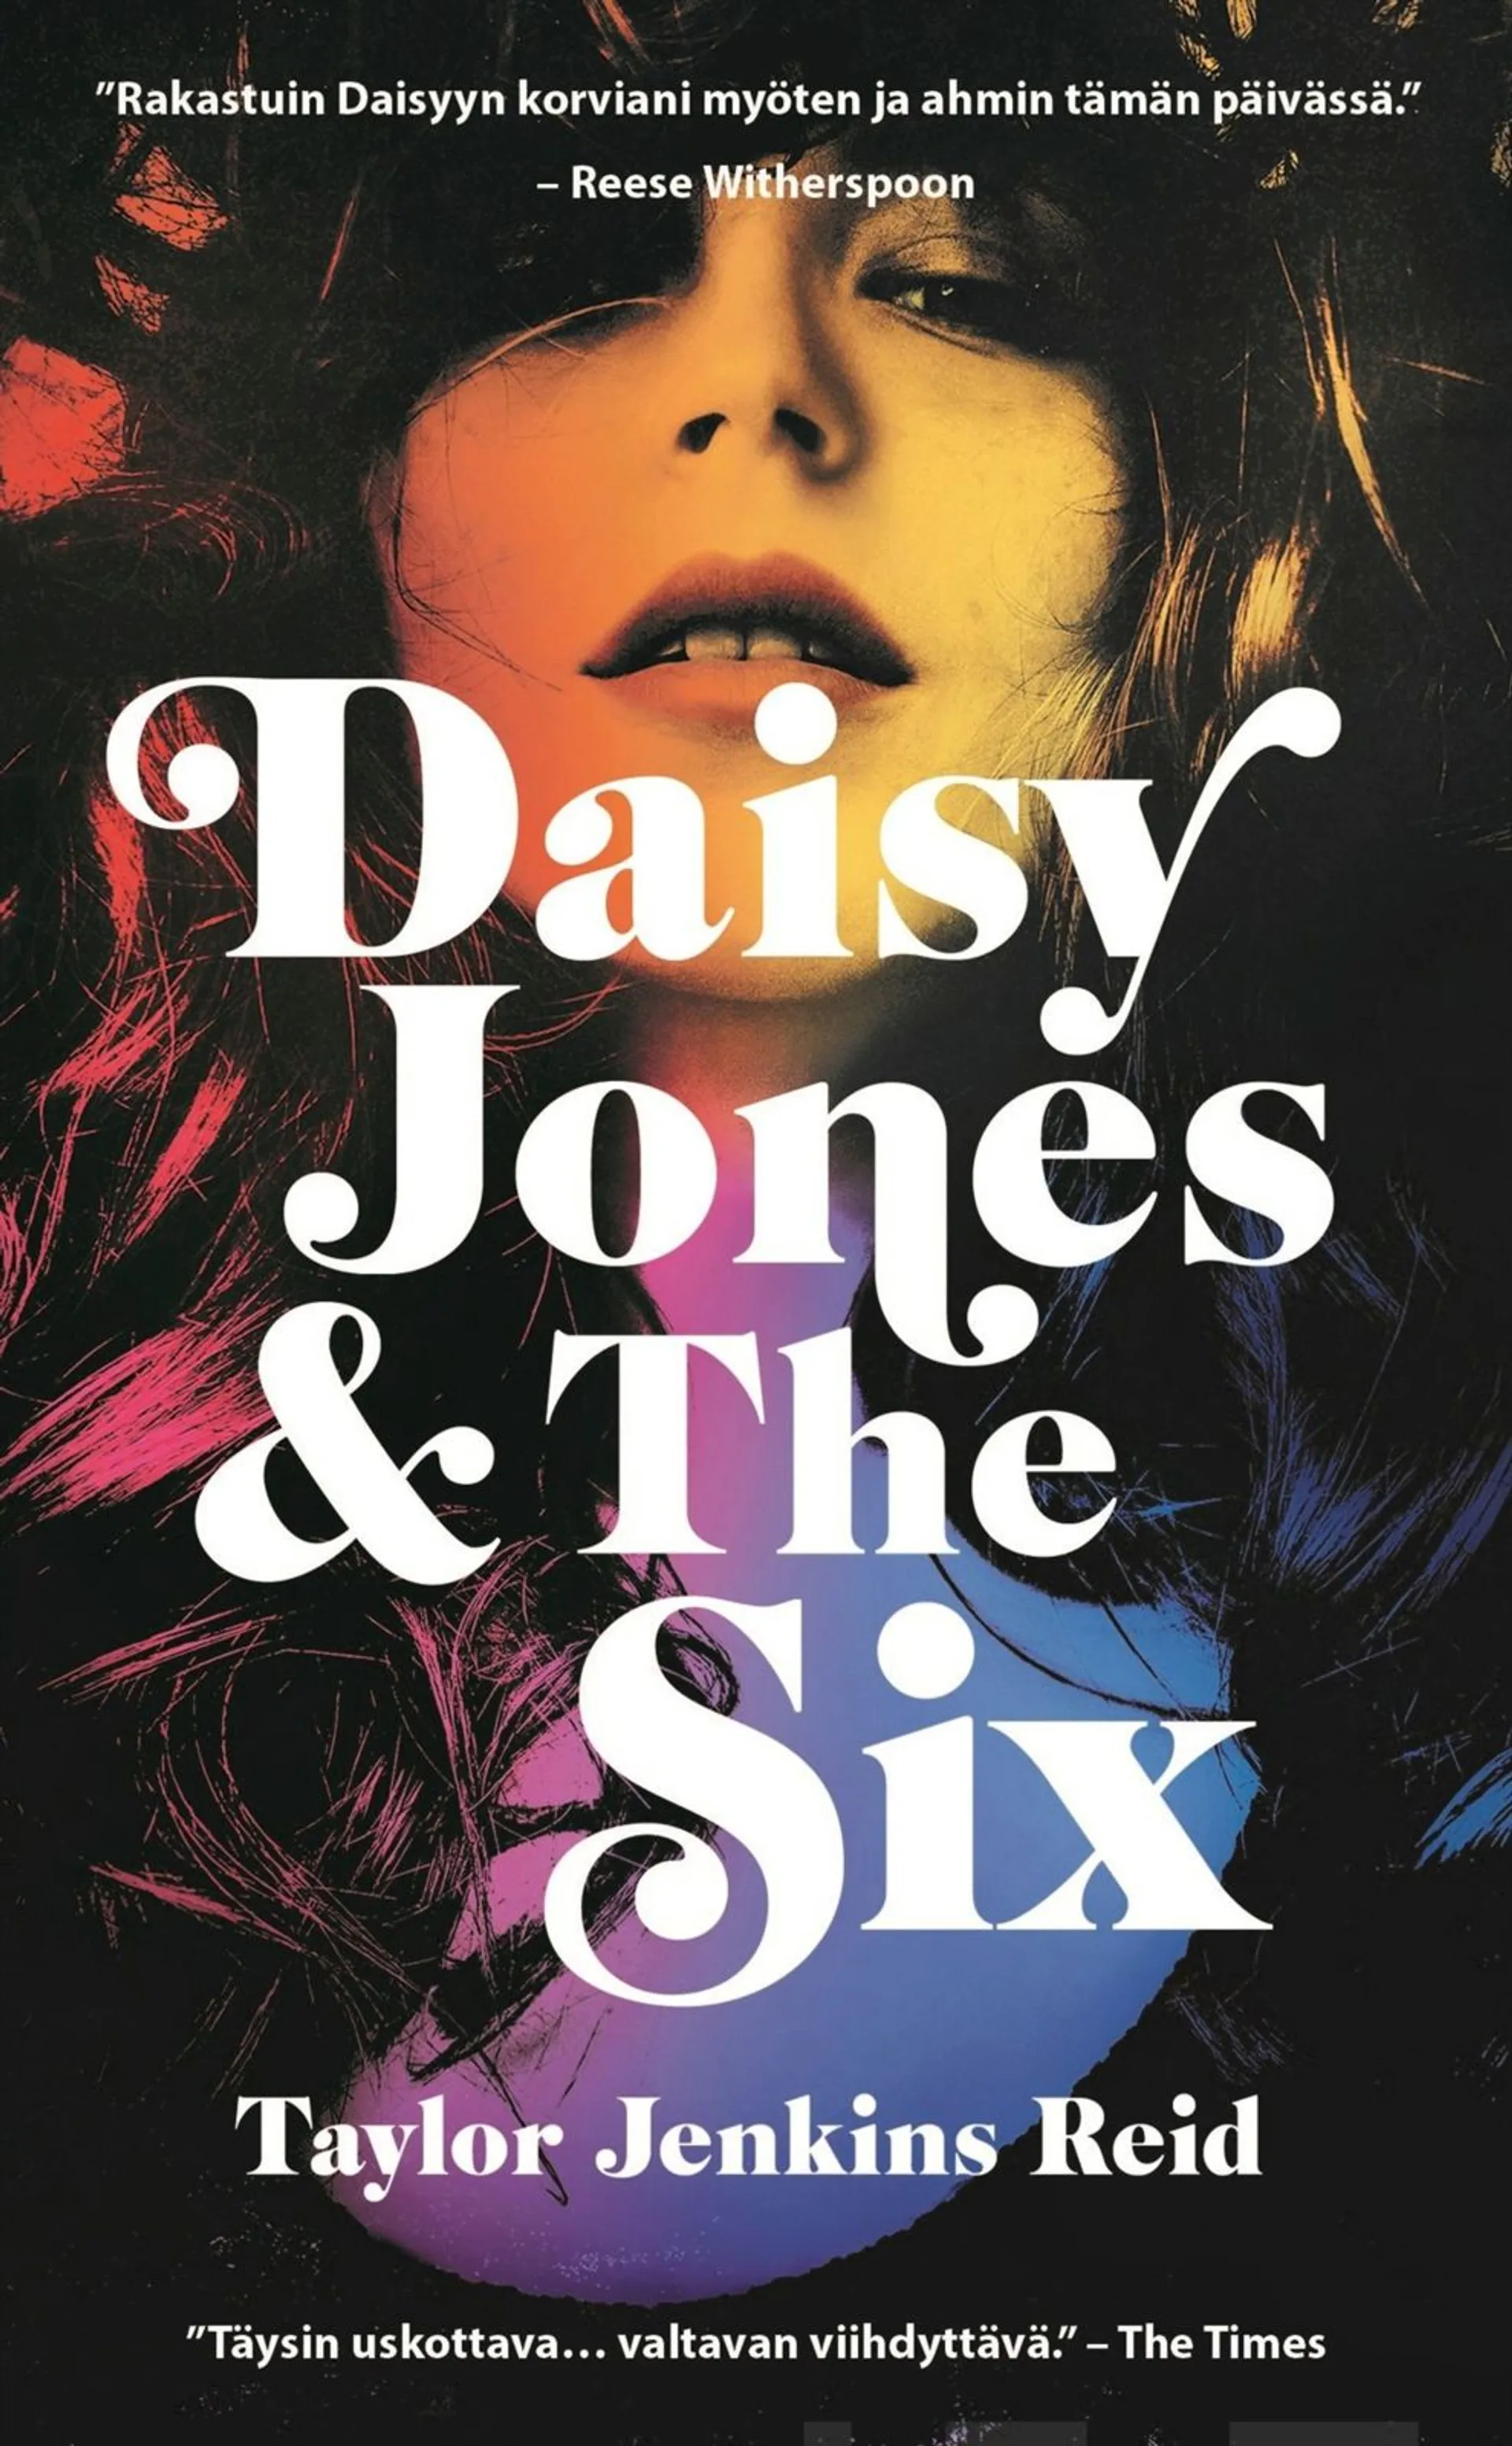 Reid, Daisy Jones & The Six